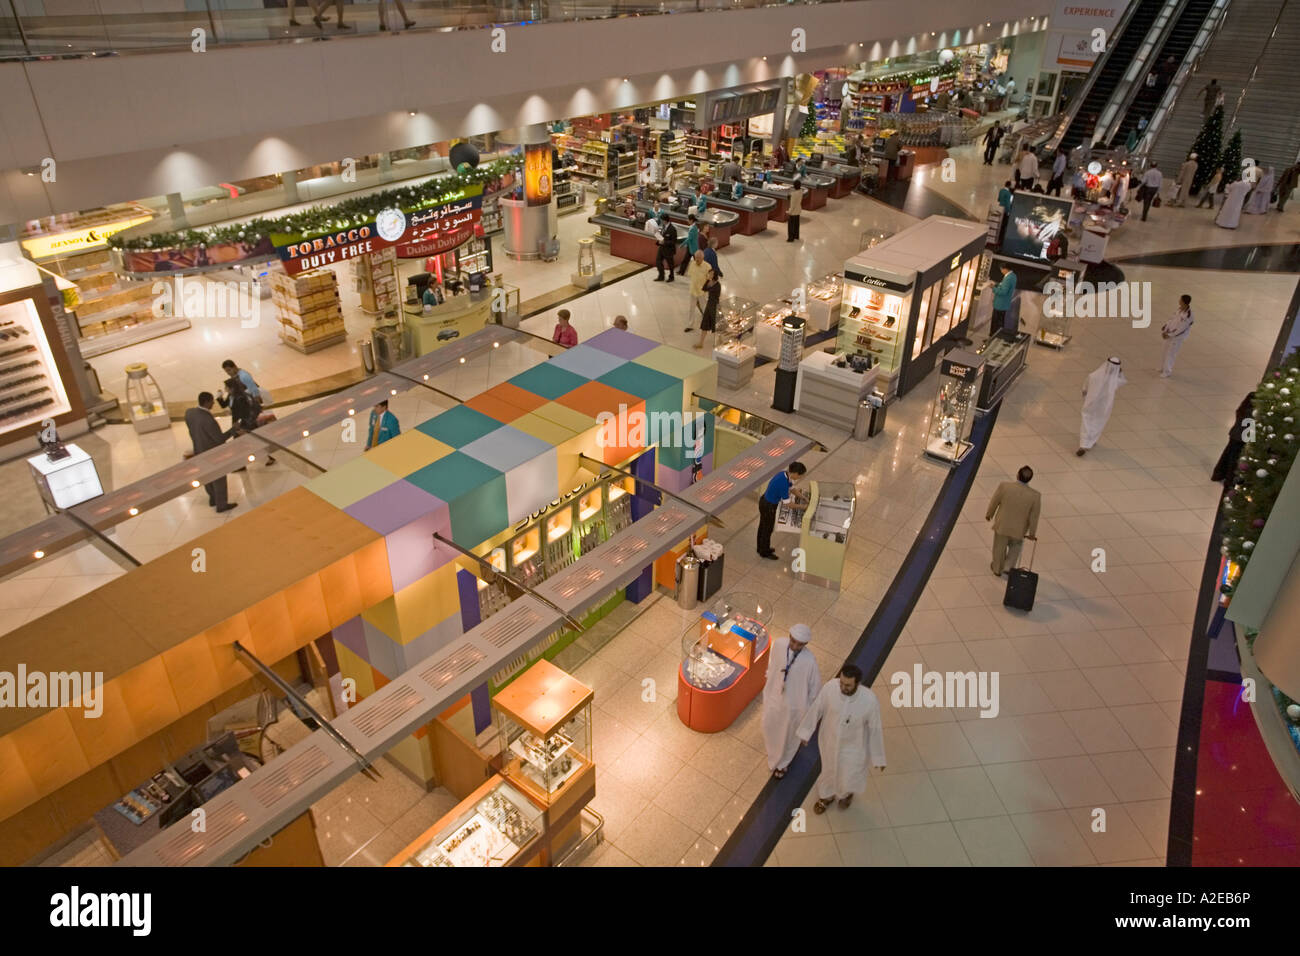 Dubai International Airport Dubai United Arab Emirates Sheikh Rashid Terminal duty free shopping zone Stock Photo